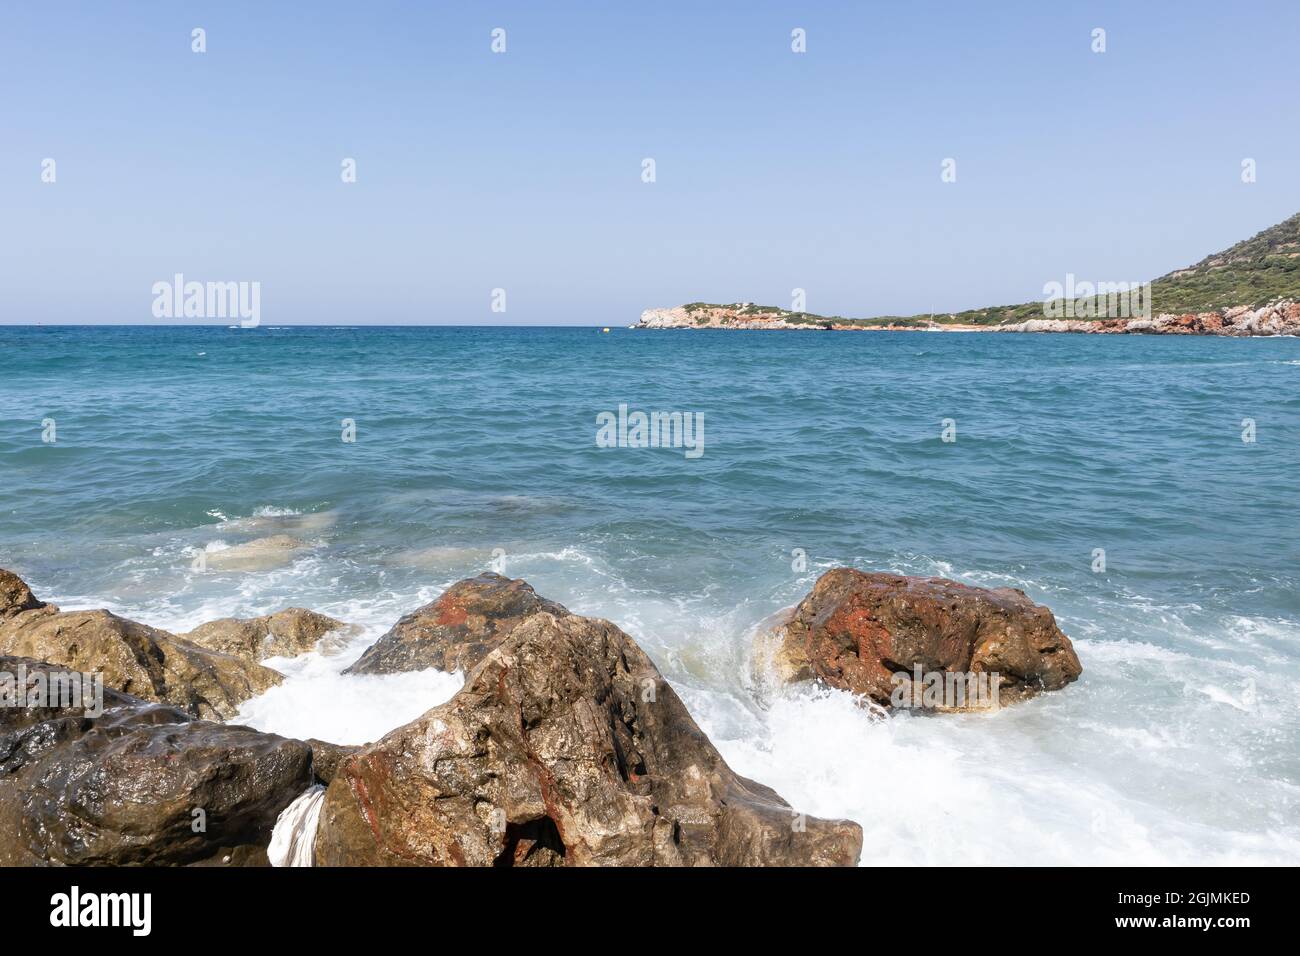 Rocks at a seashore on a hot summer day Stock Photo